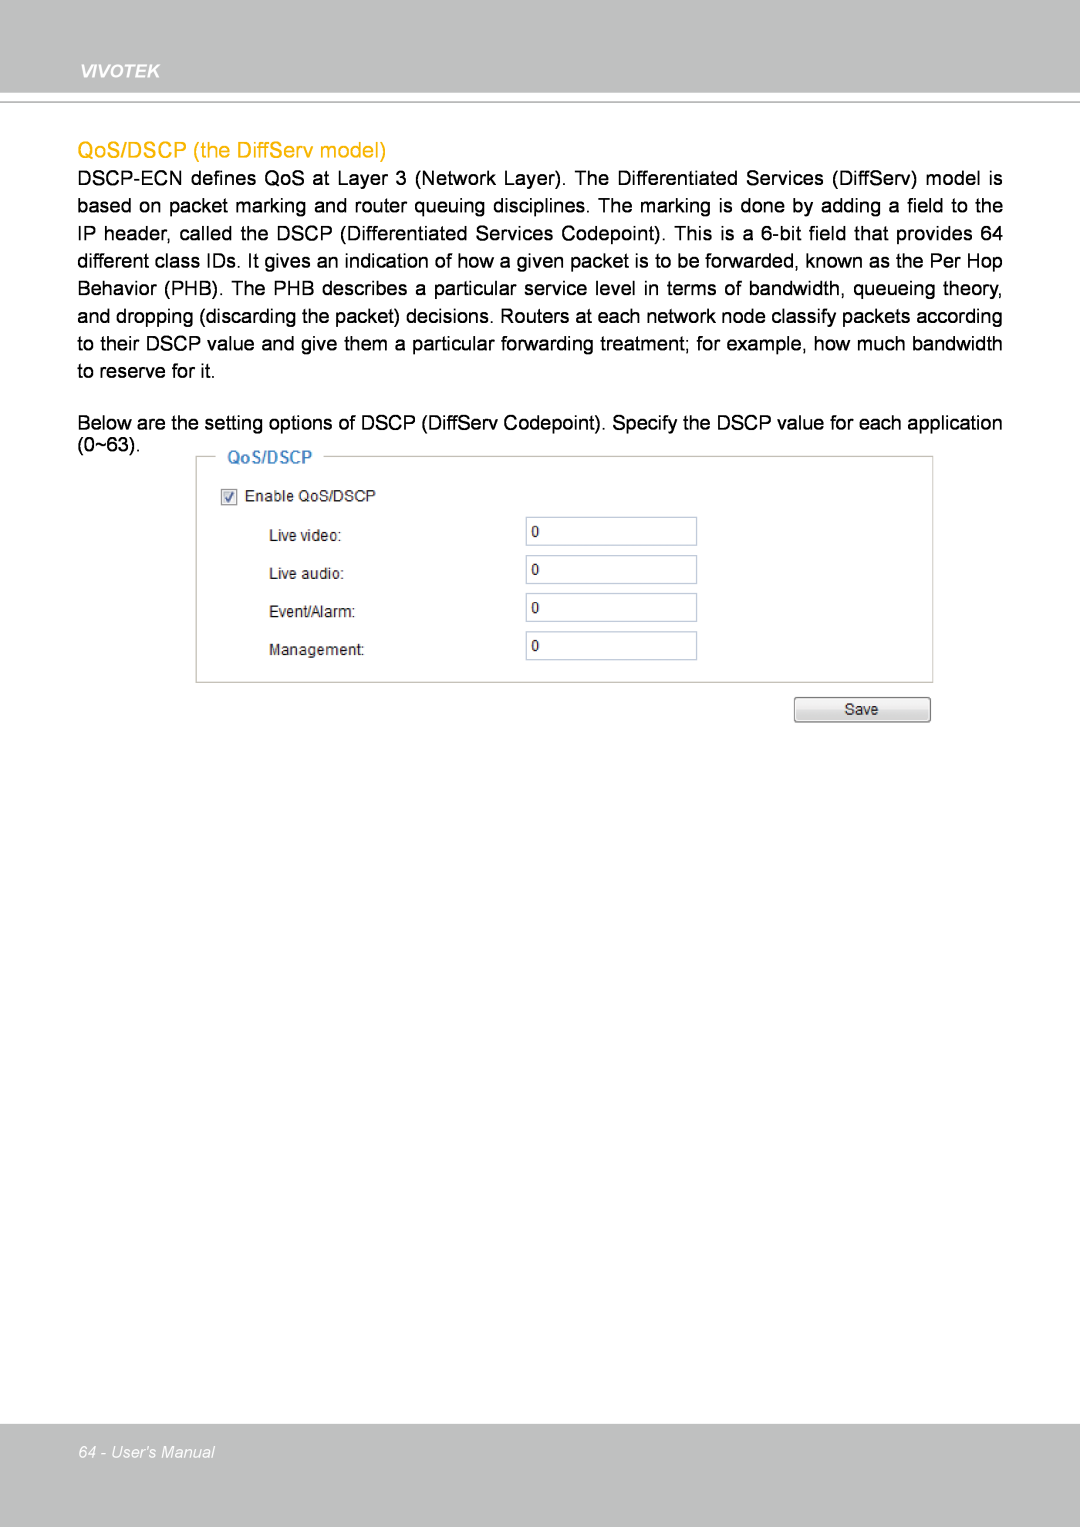 Vivotek IP8352 manual QoS/DSCP the DiffServ model, Users Manual 